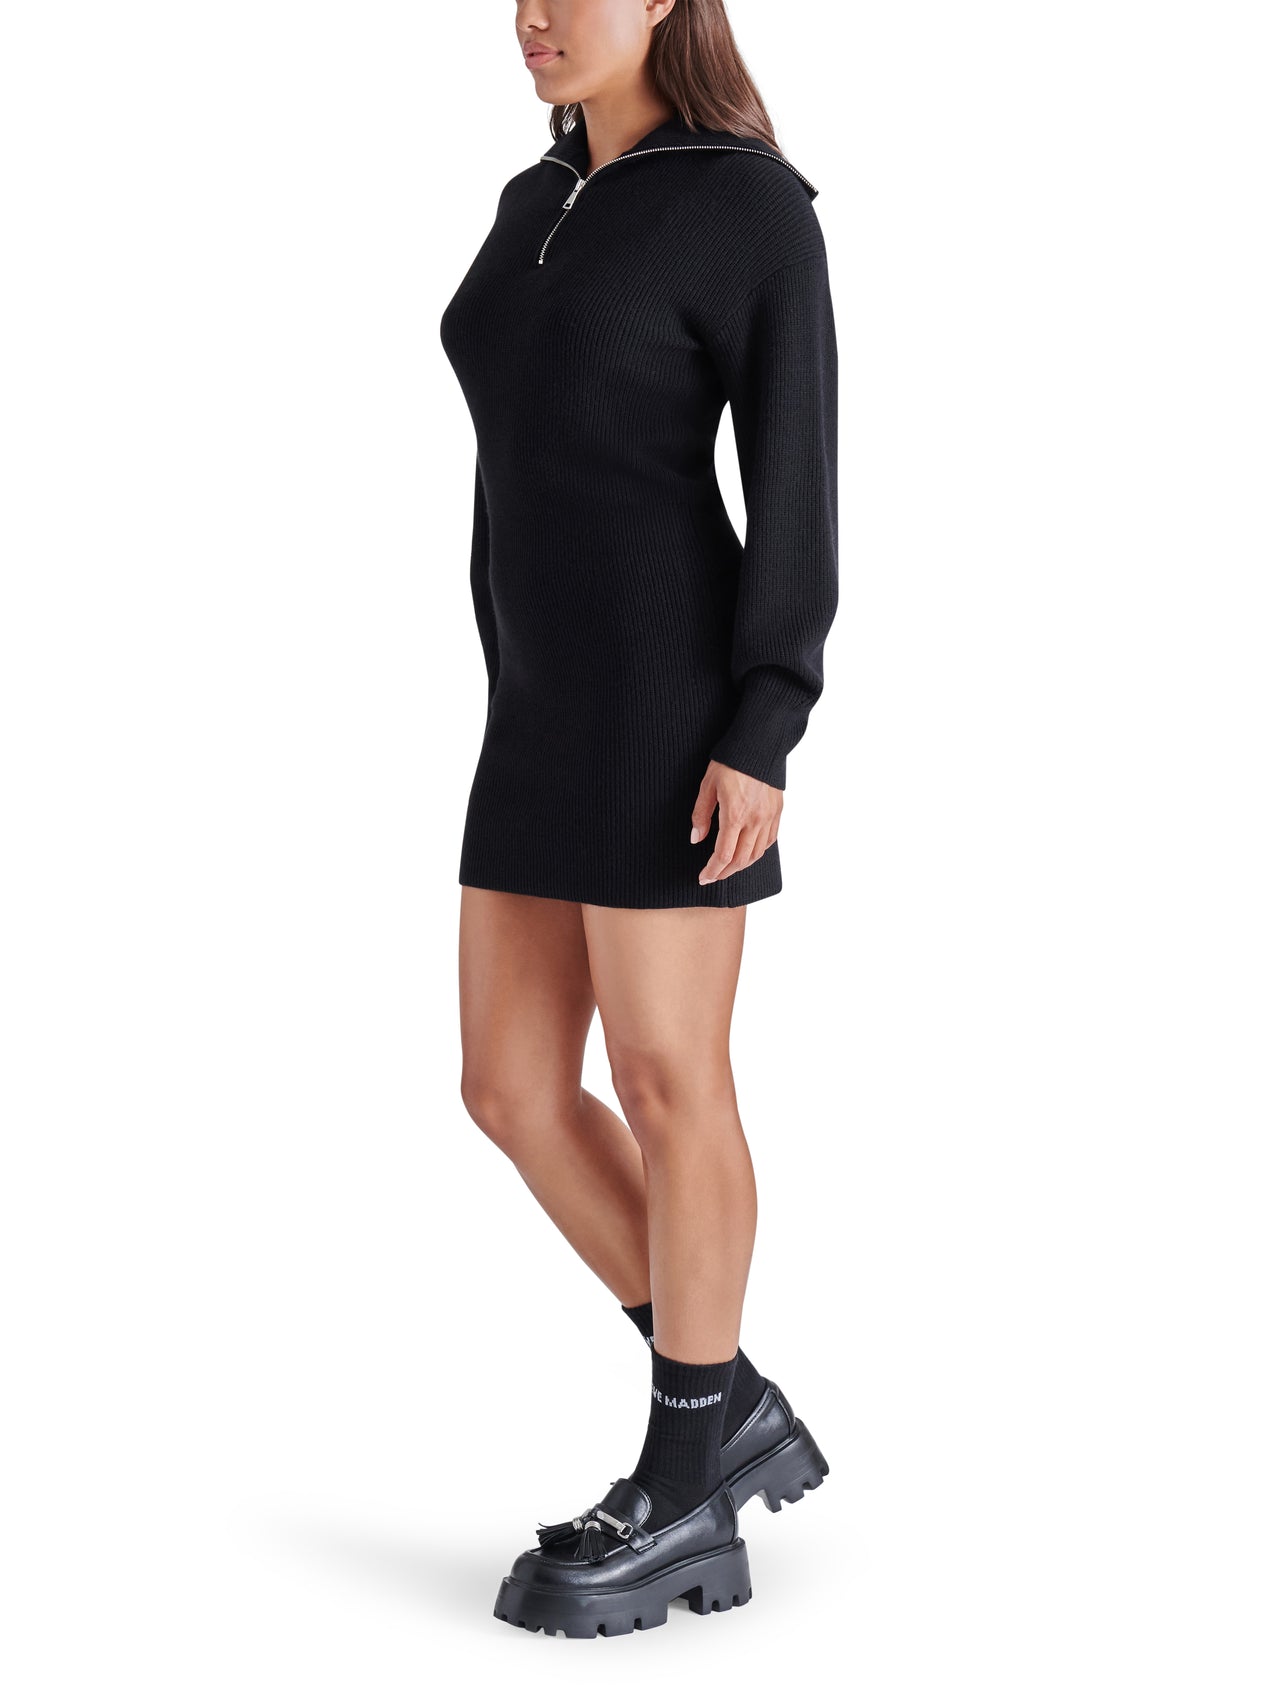 Black Rowena Dress, Mini Dress by Steve Madden | LIT Boutique